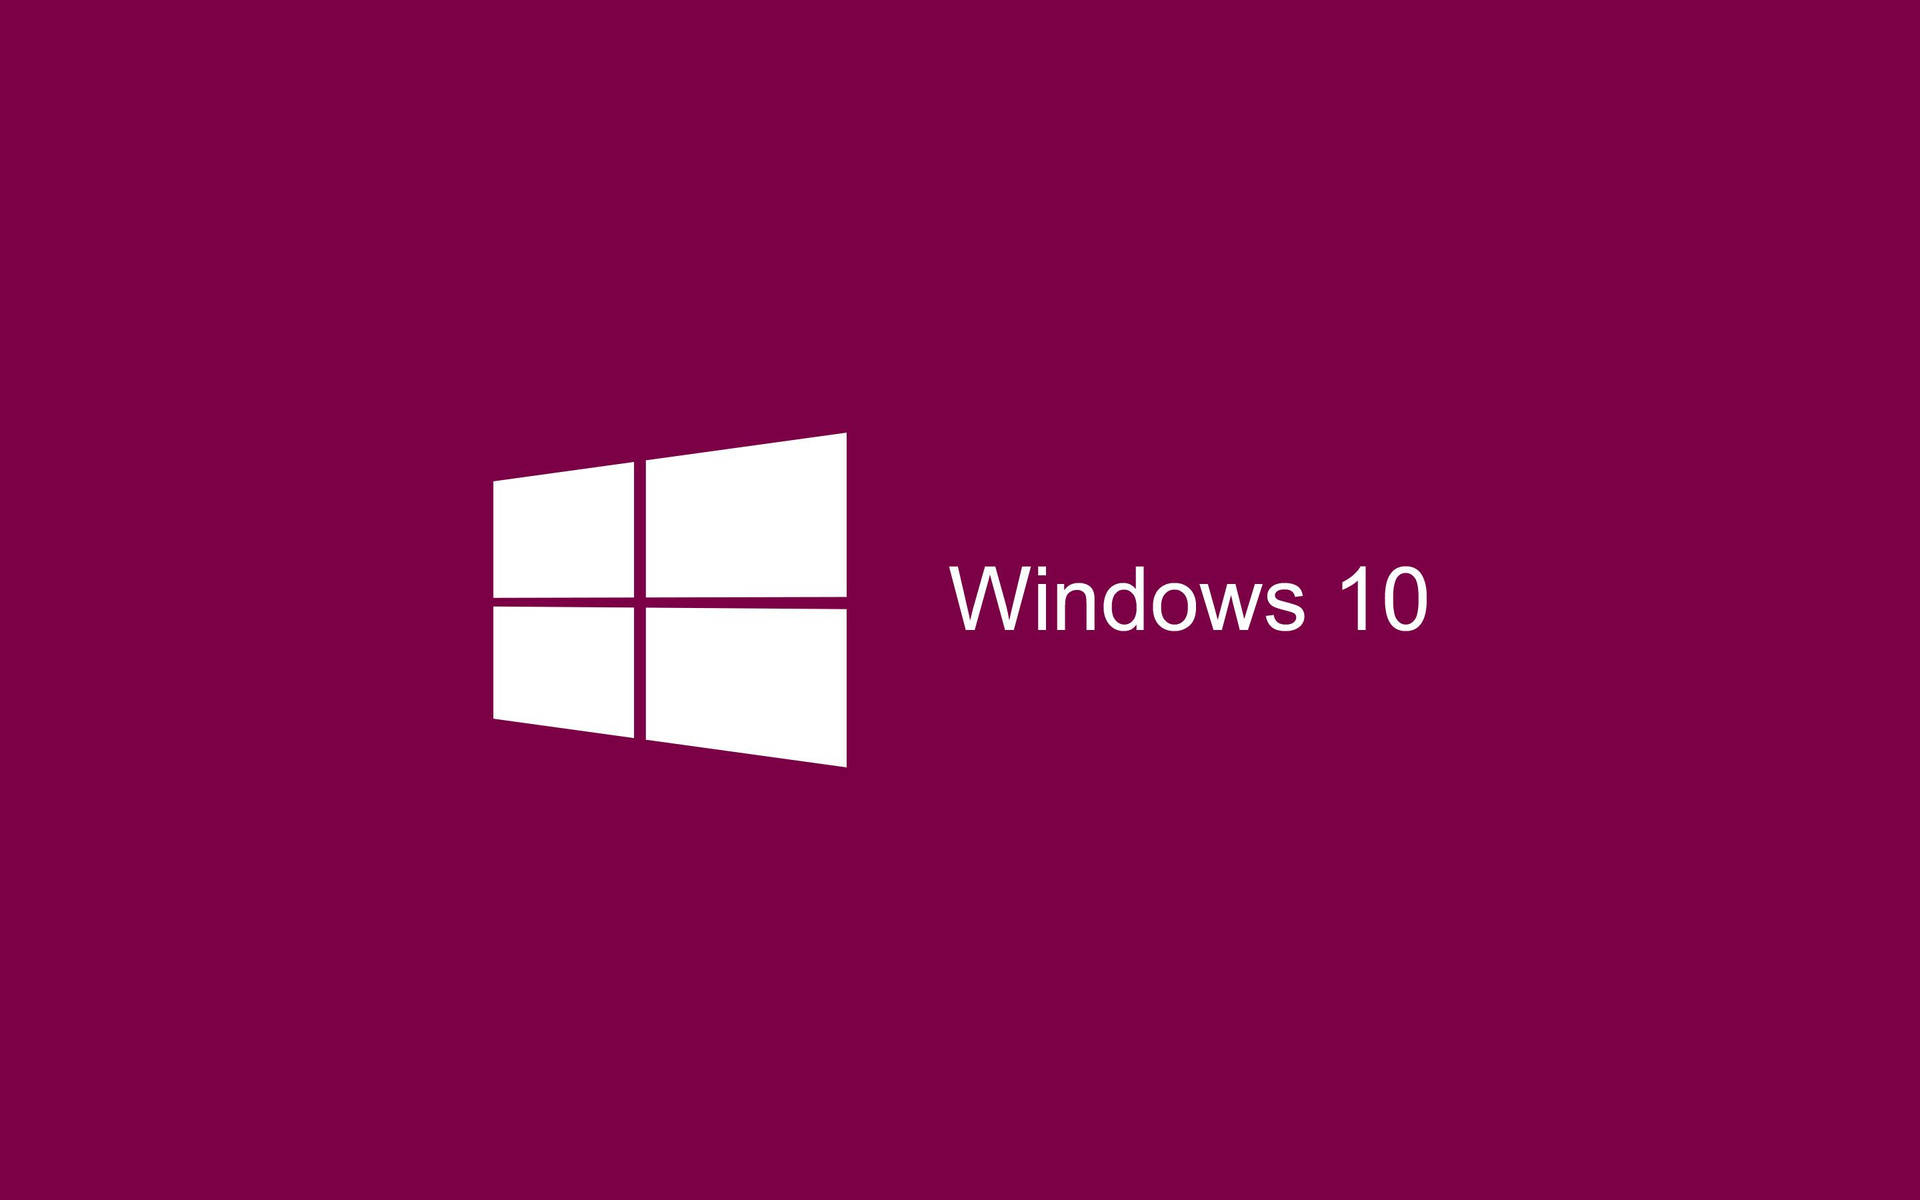 Free Windows 10 Wallpaper Downloads, [100+] Windows 10 Wallpapers for FREE  